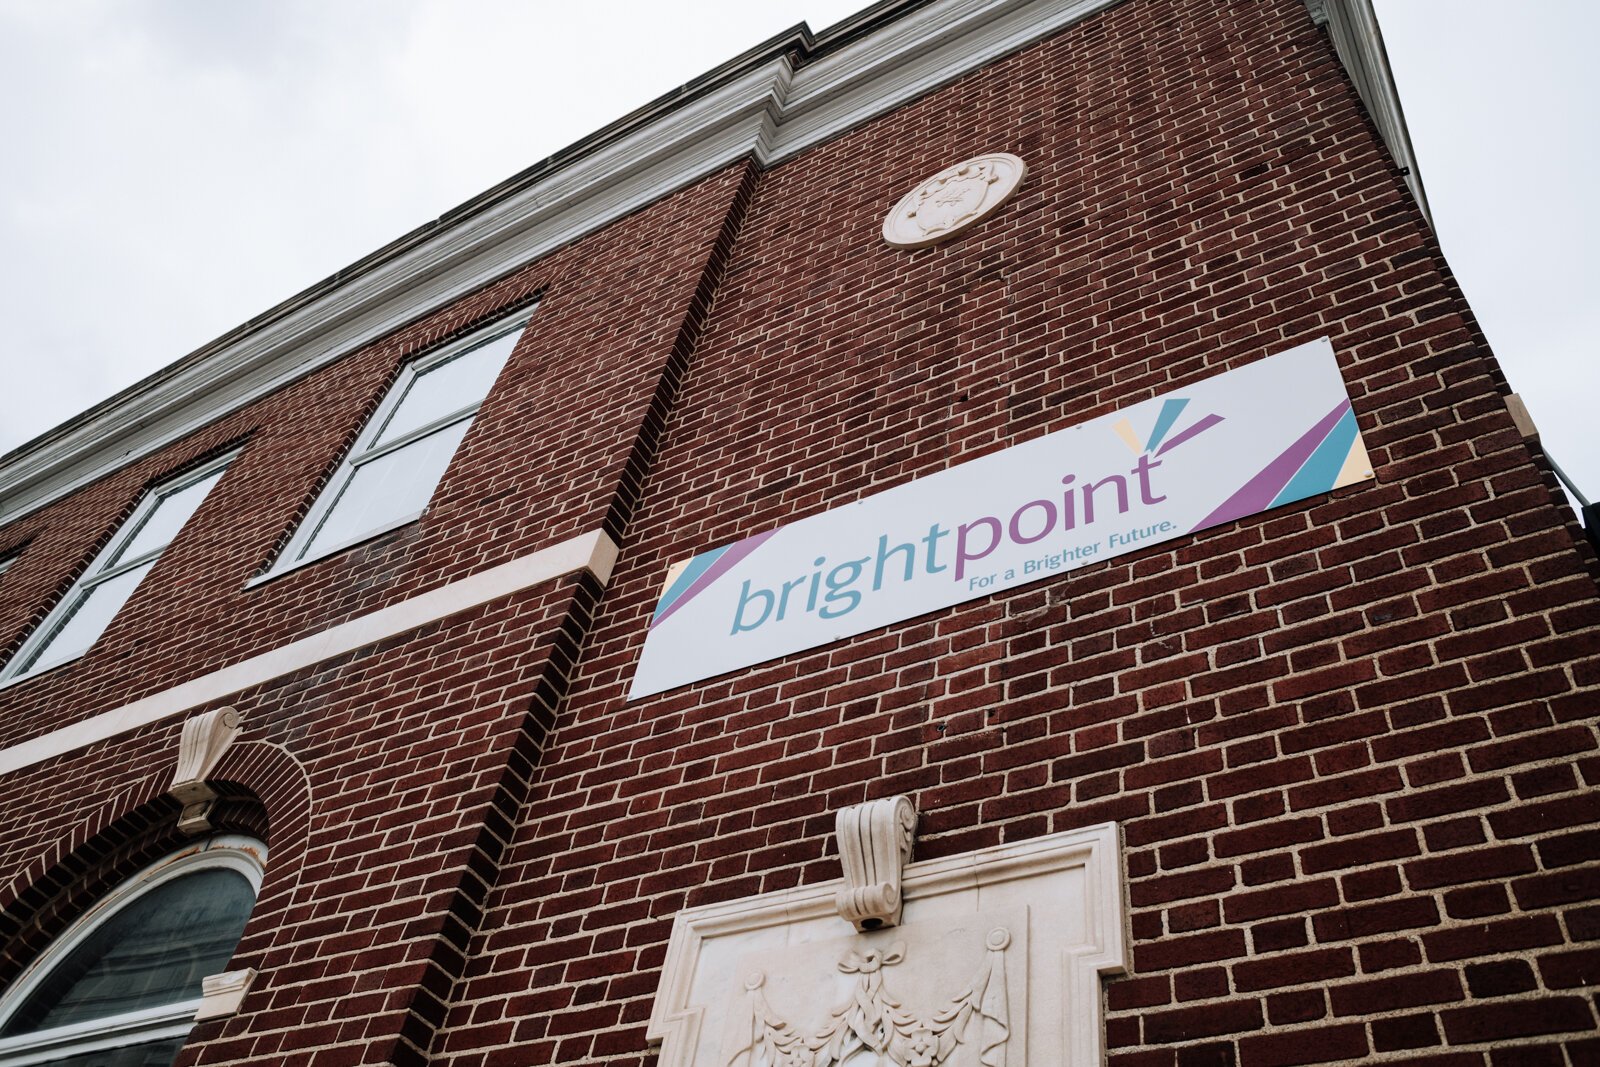 Brightpoint is located at 227 E. Washington Blvd.